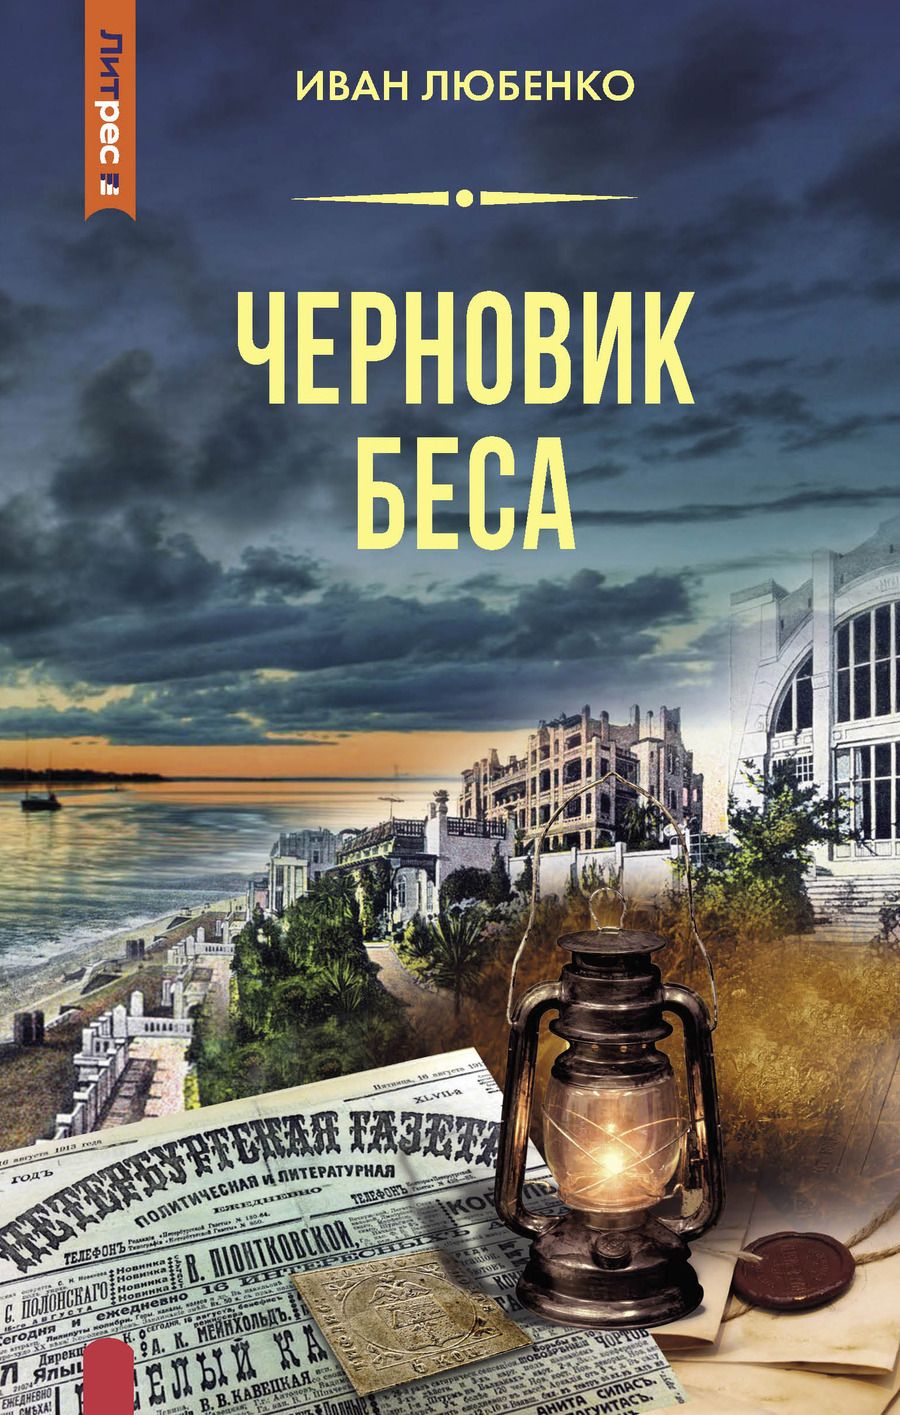 Обложка книги "Любенко: Черновик беса"